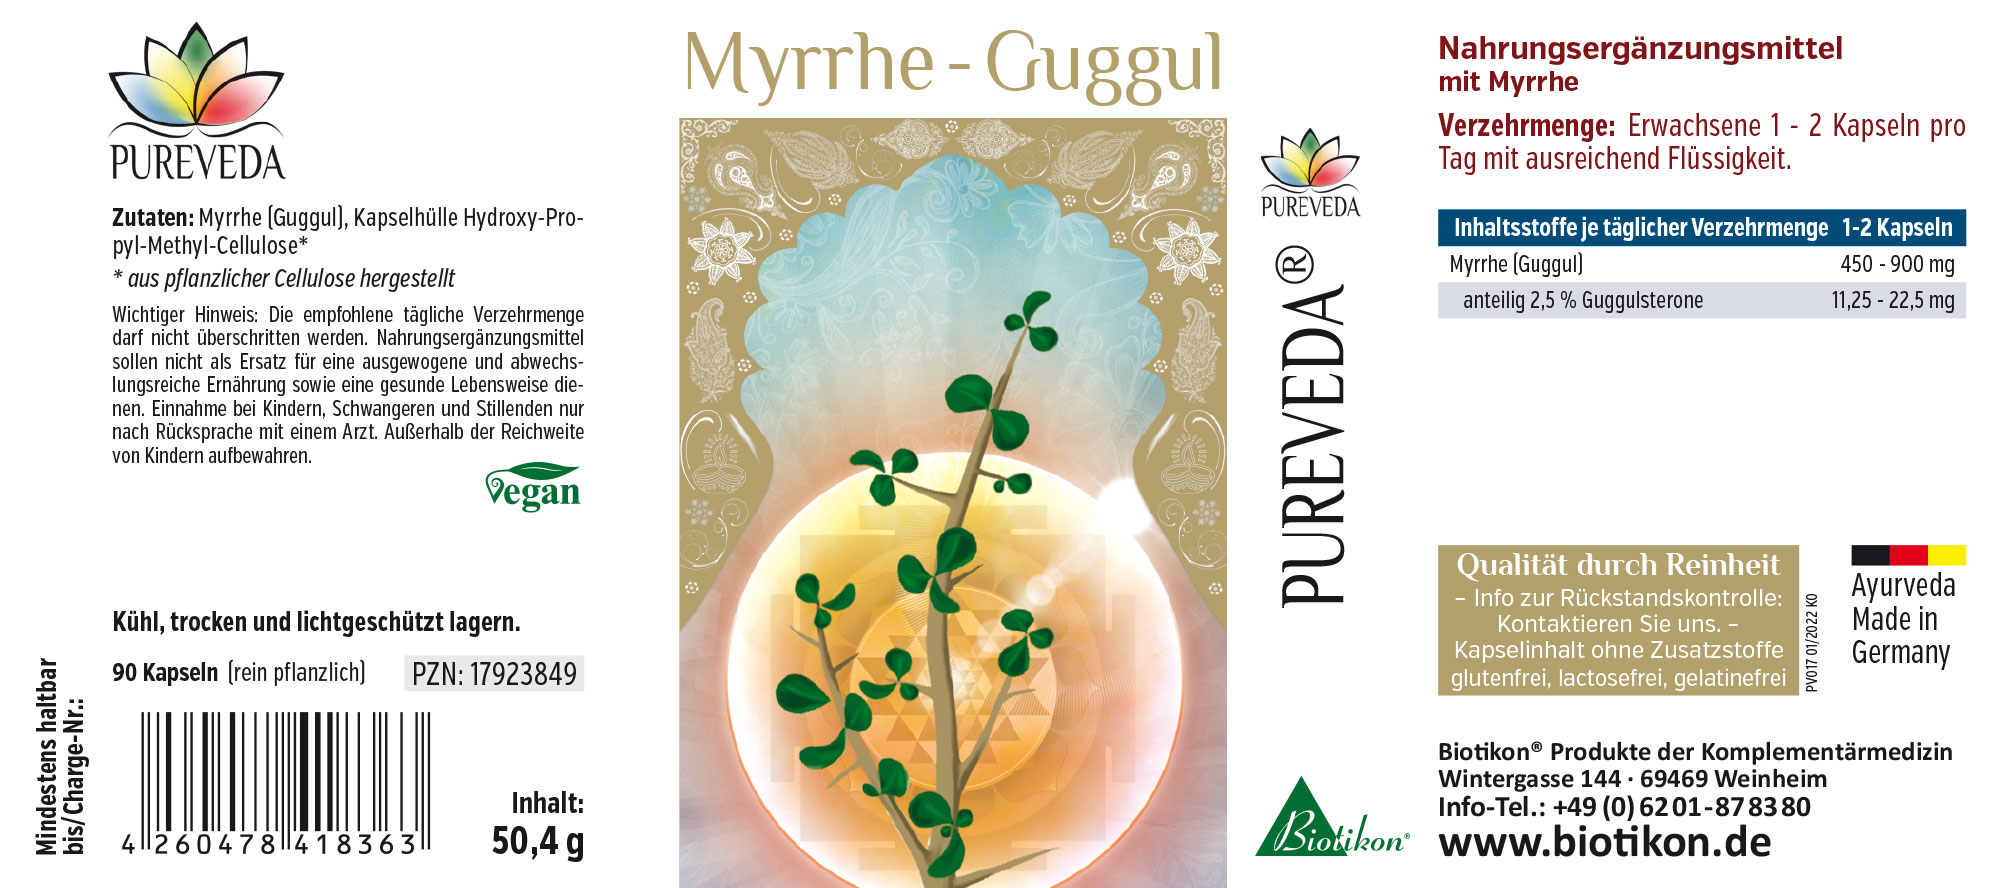 PUREVEDA Myrrhe - Guggul